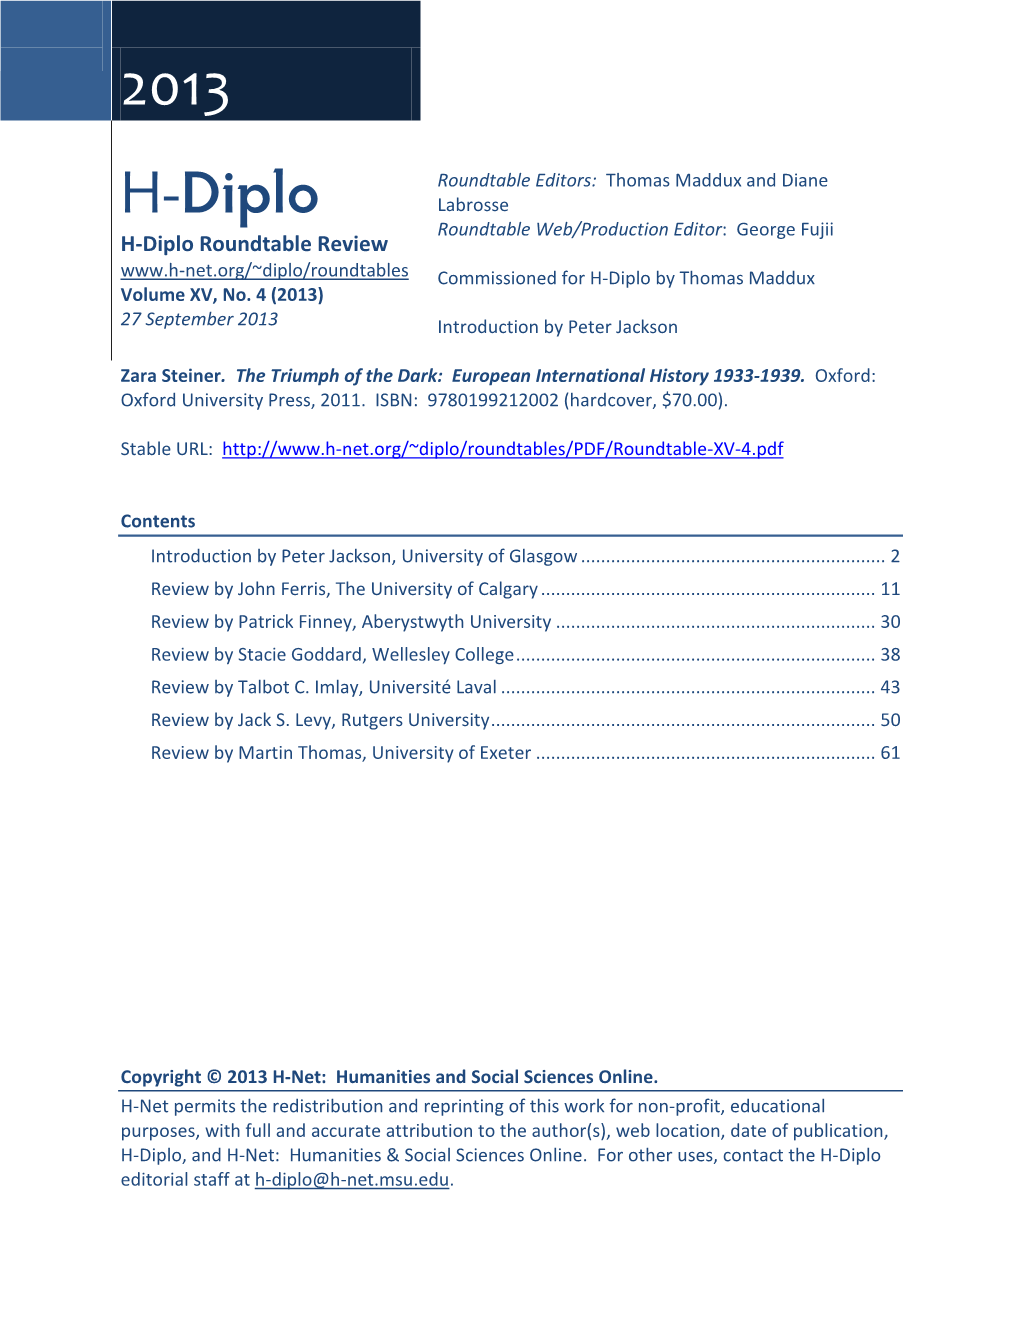 H-Diplo Roundtable, Vol. XV, No. 4